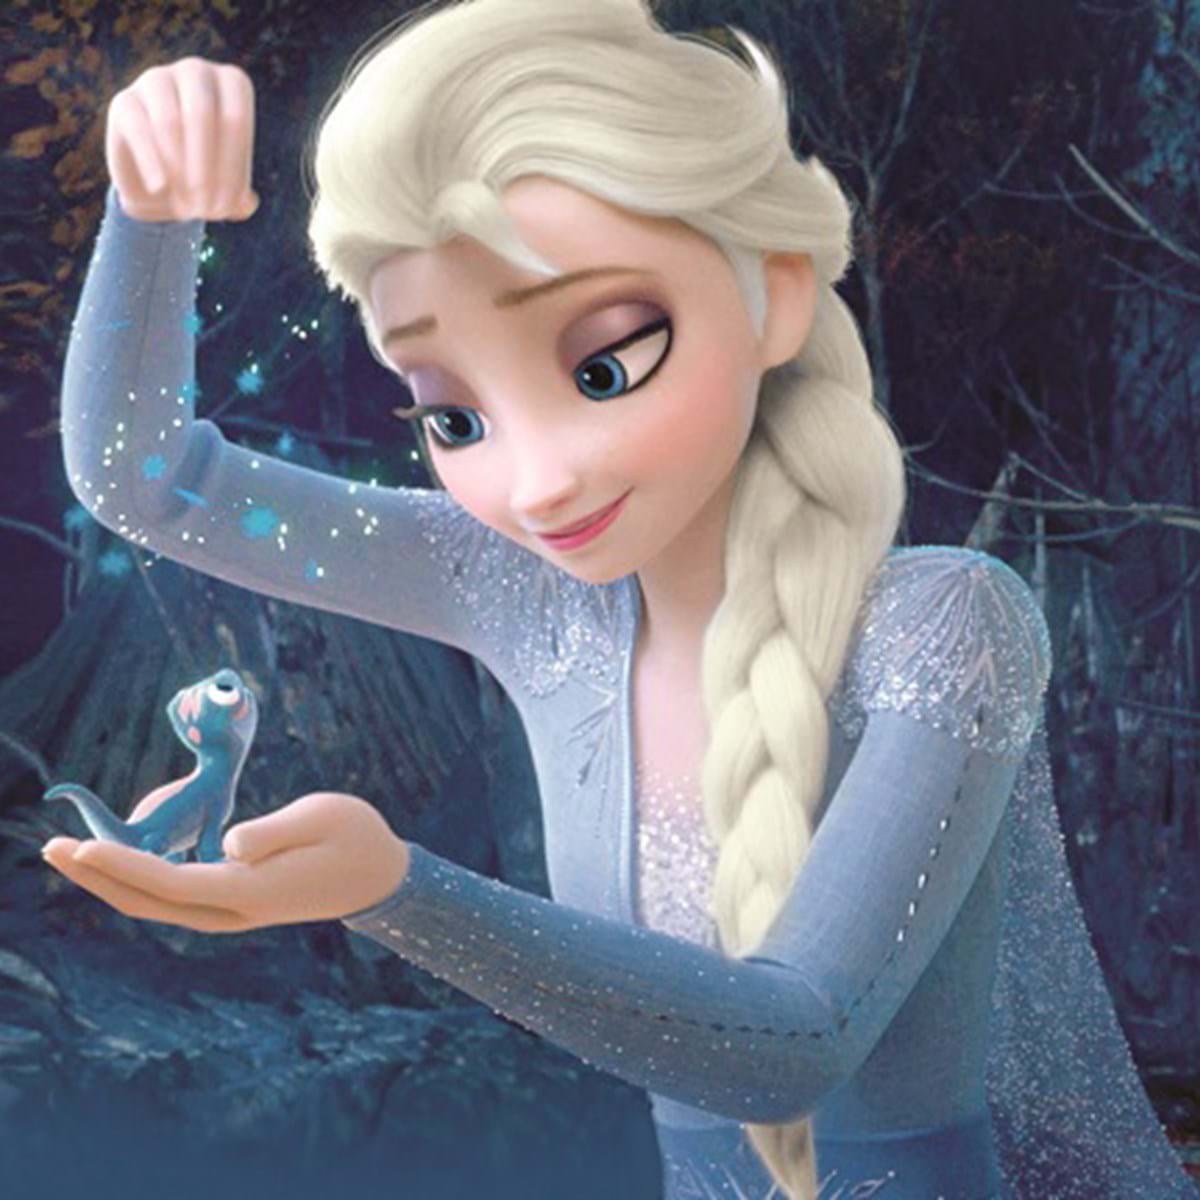 Antes de Frozen 3: Sequência de Frozen começa este ano - mas